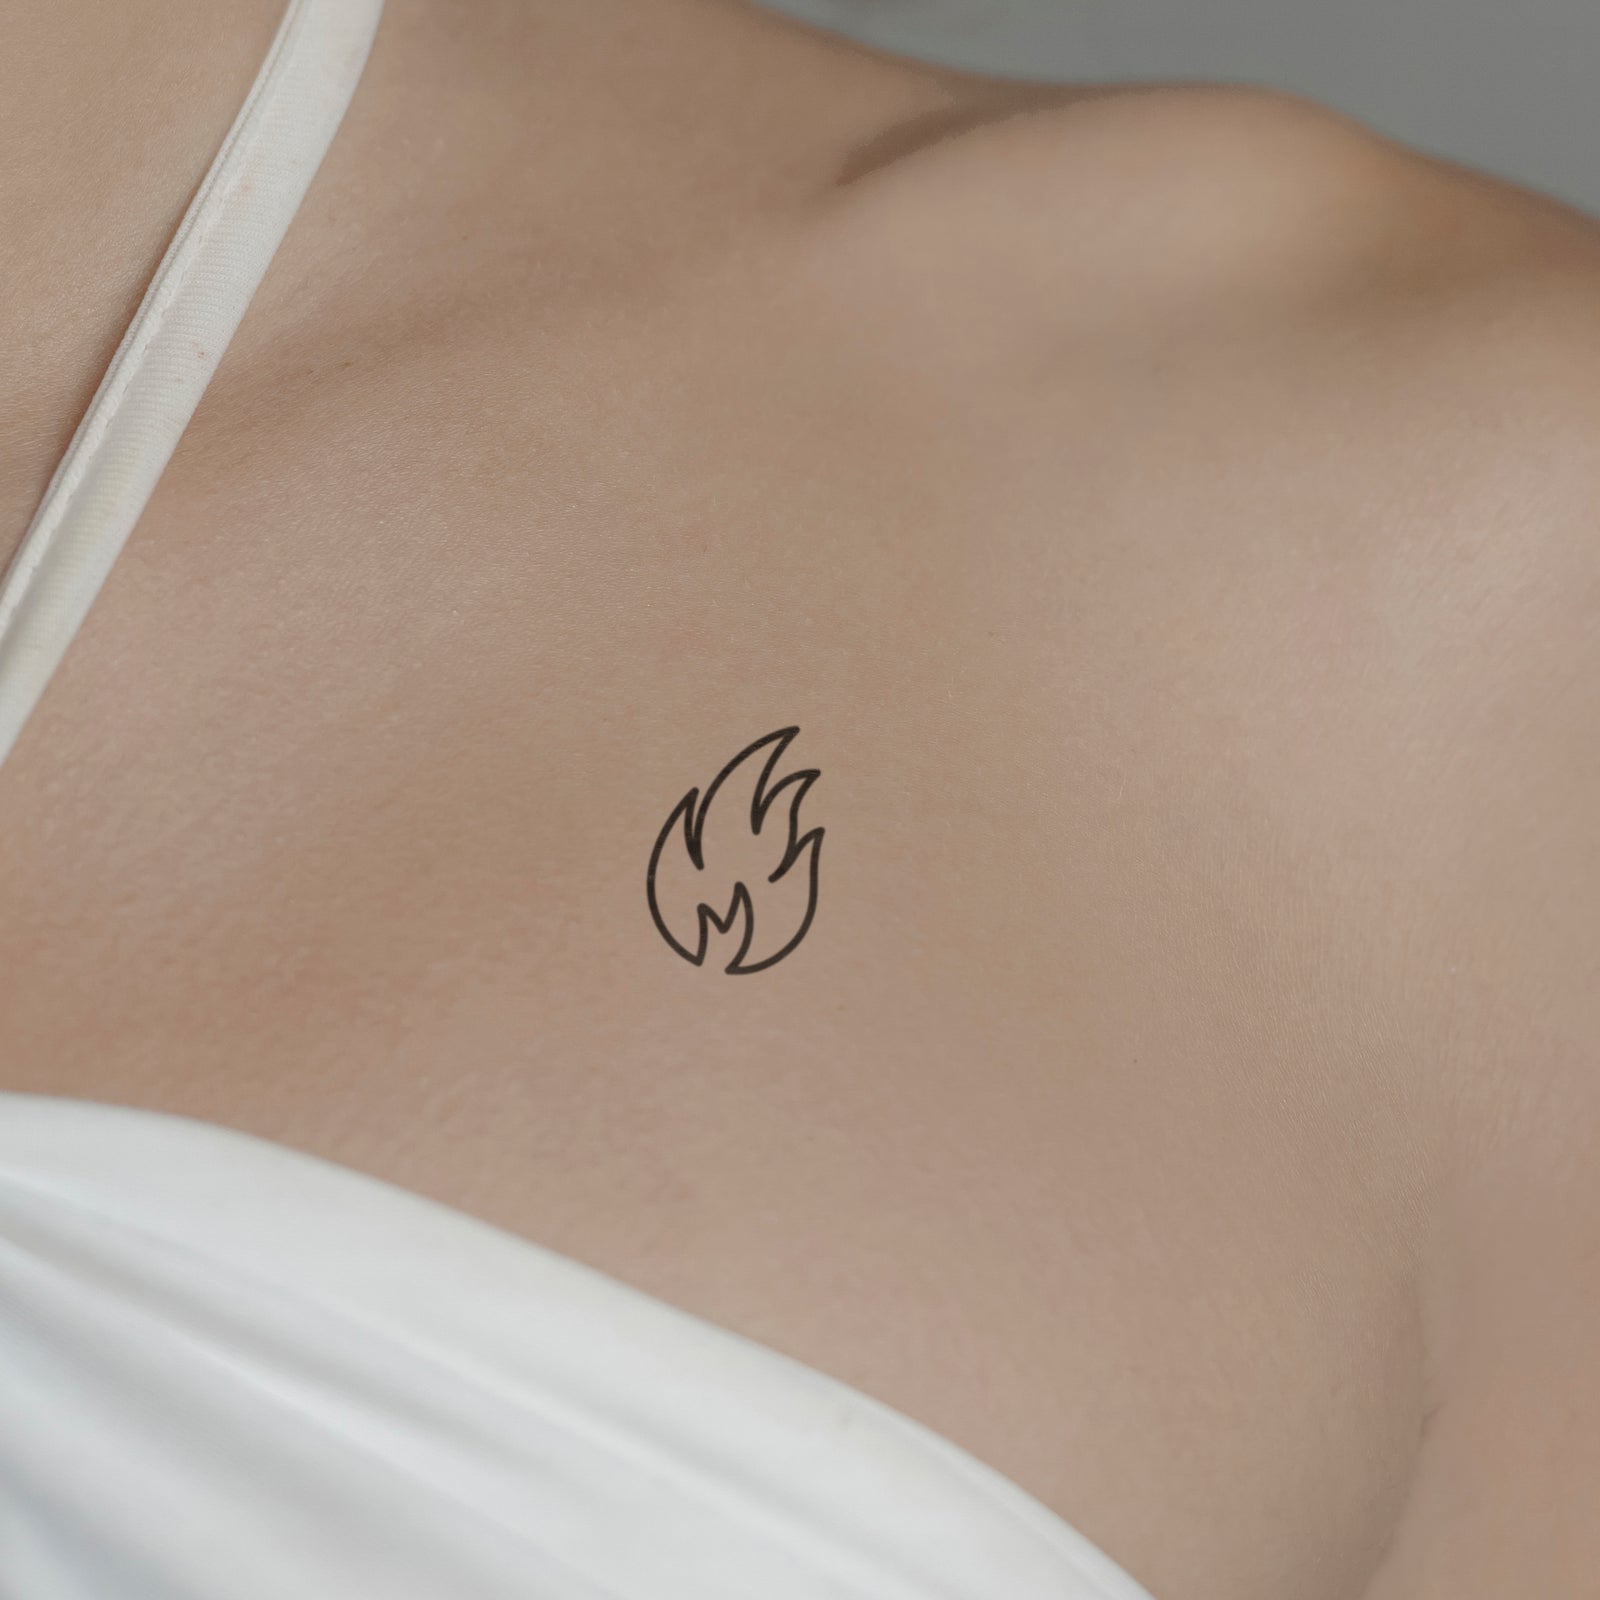 Ink Correct Ph - Minimalist Fire Tattoo Ideas. Grab... | Facebook